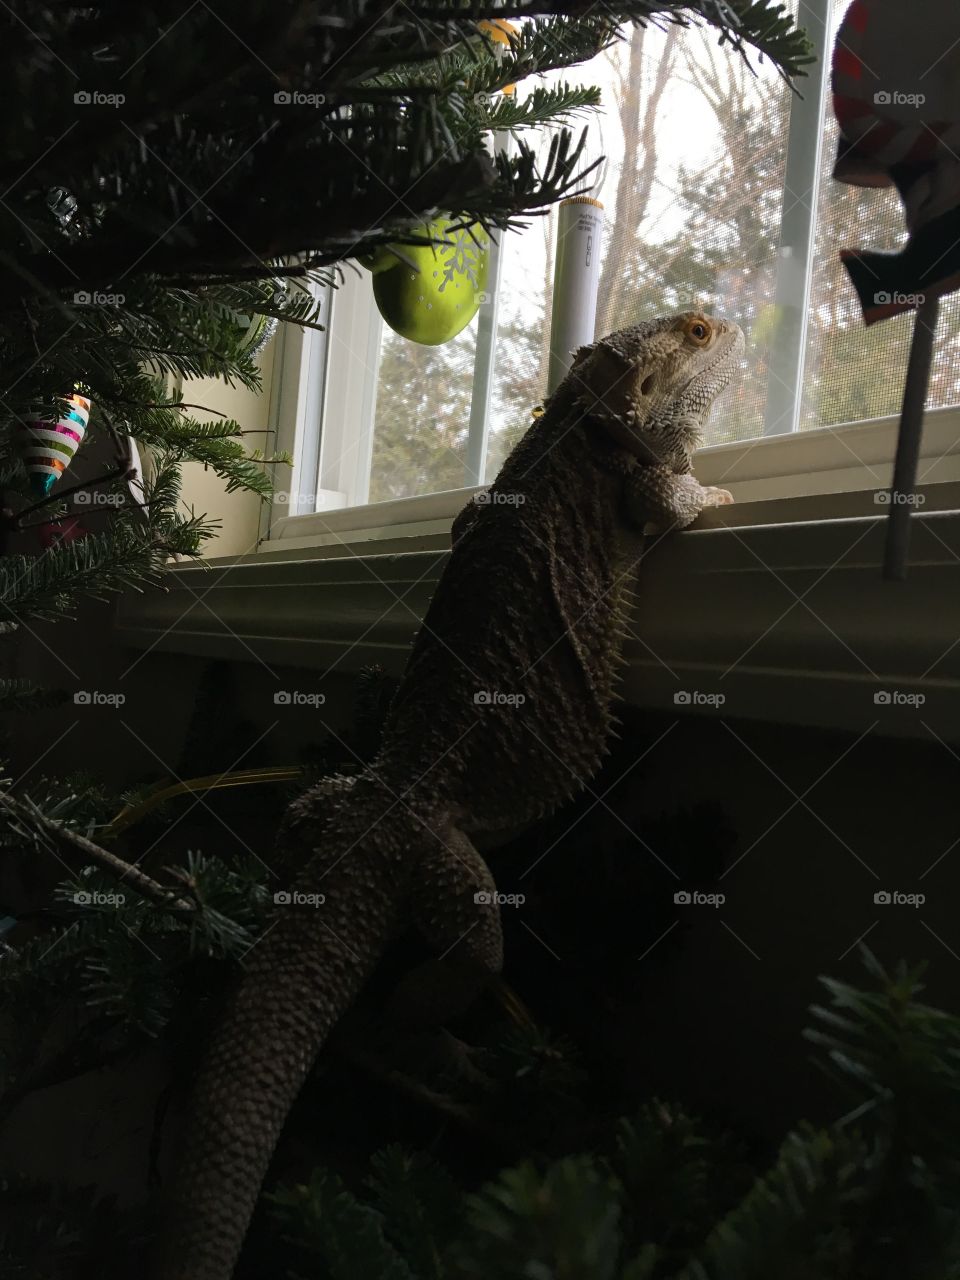 Lizard in the Christmas tree